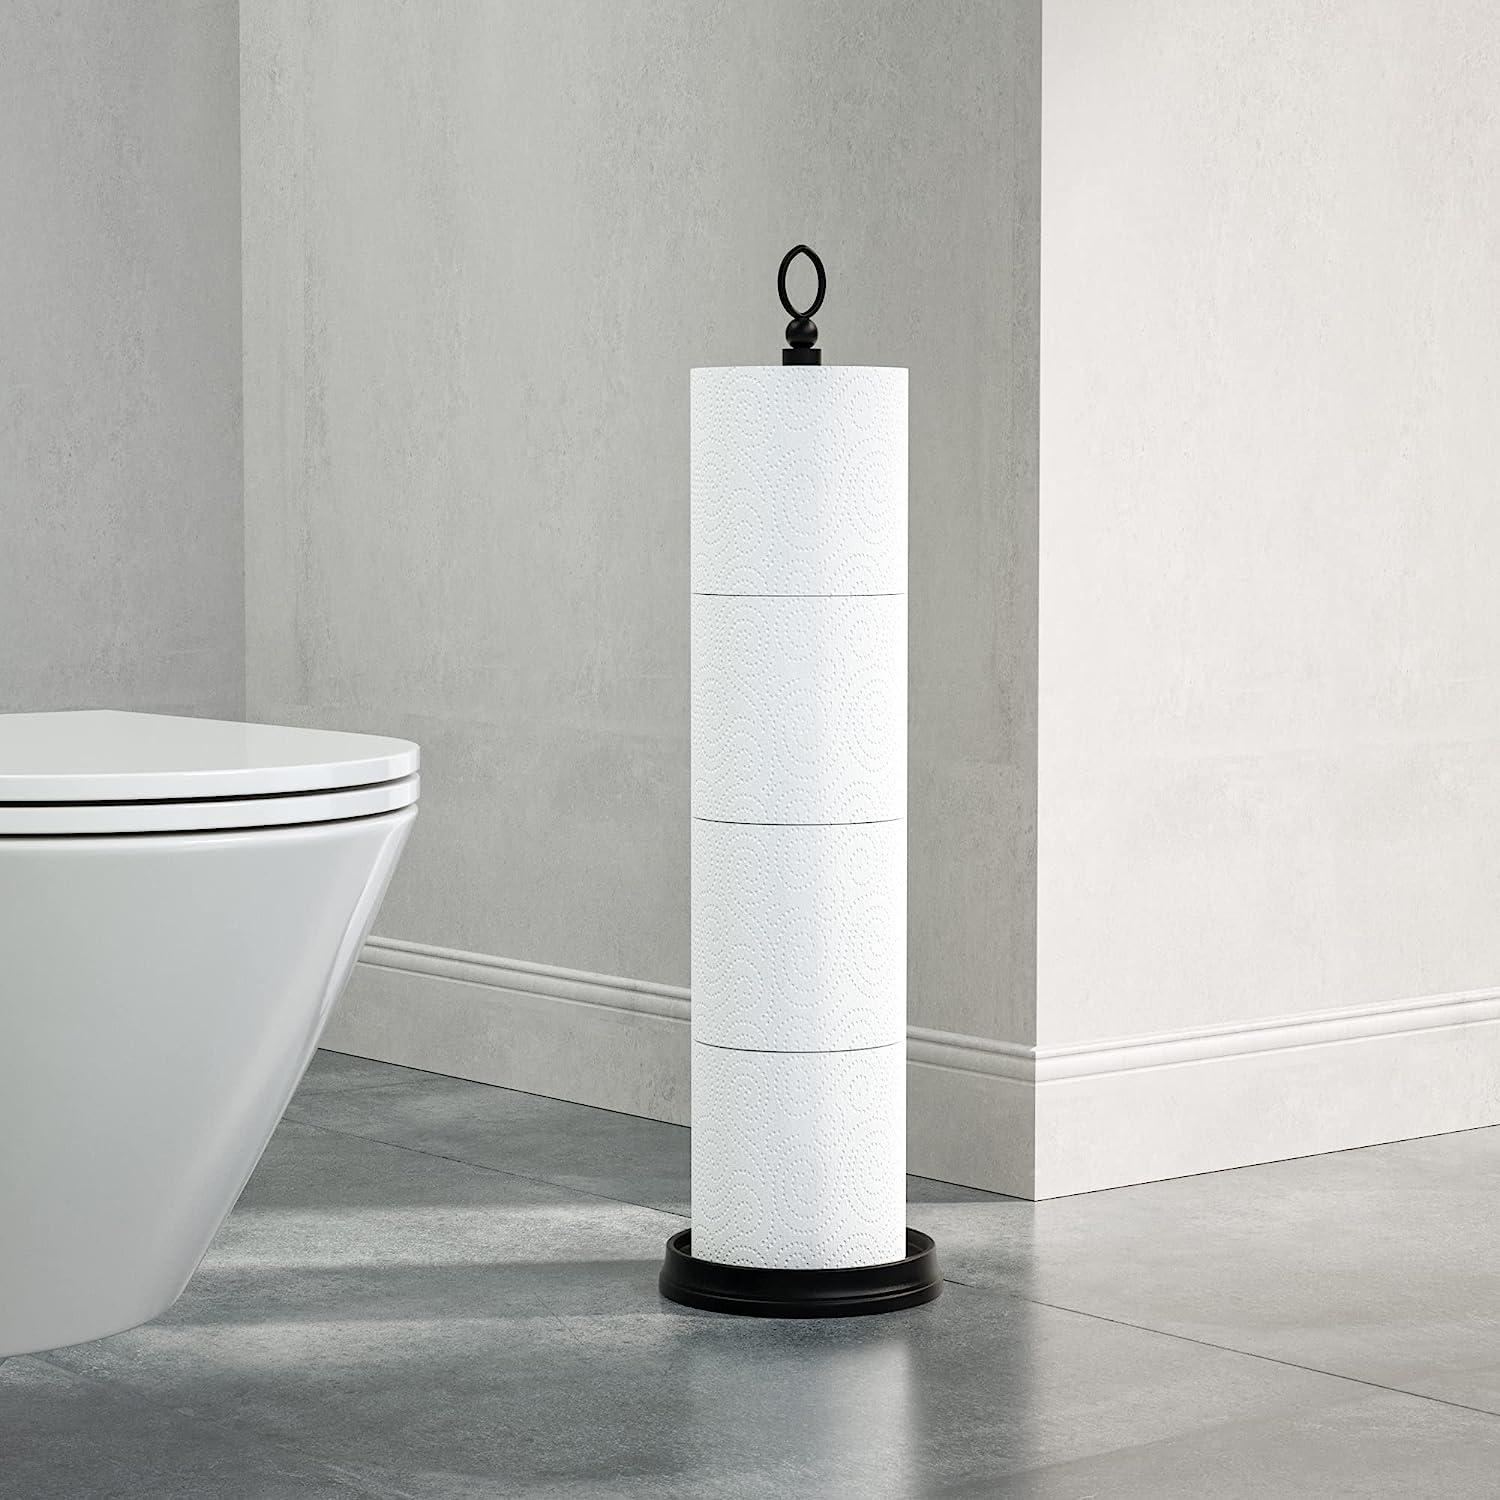 Modern Flat-End Matte Black Wall-Mounted Toilet Paper Holder + Reviews